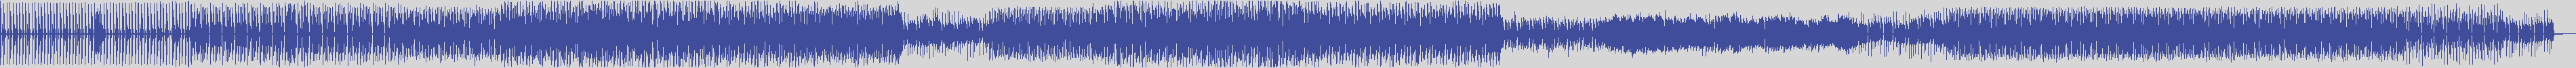 airplane_records [ARP1024] Tommy Vee - Hit That Dancefloor [Album Mix] audio wave form